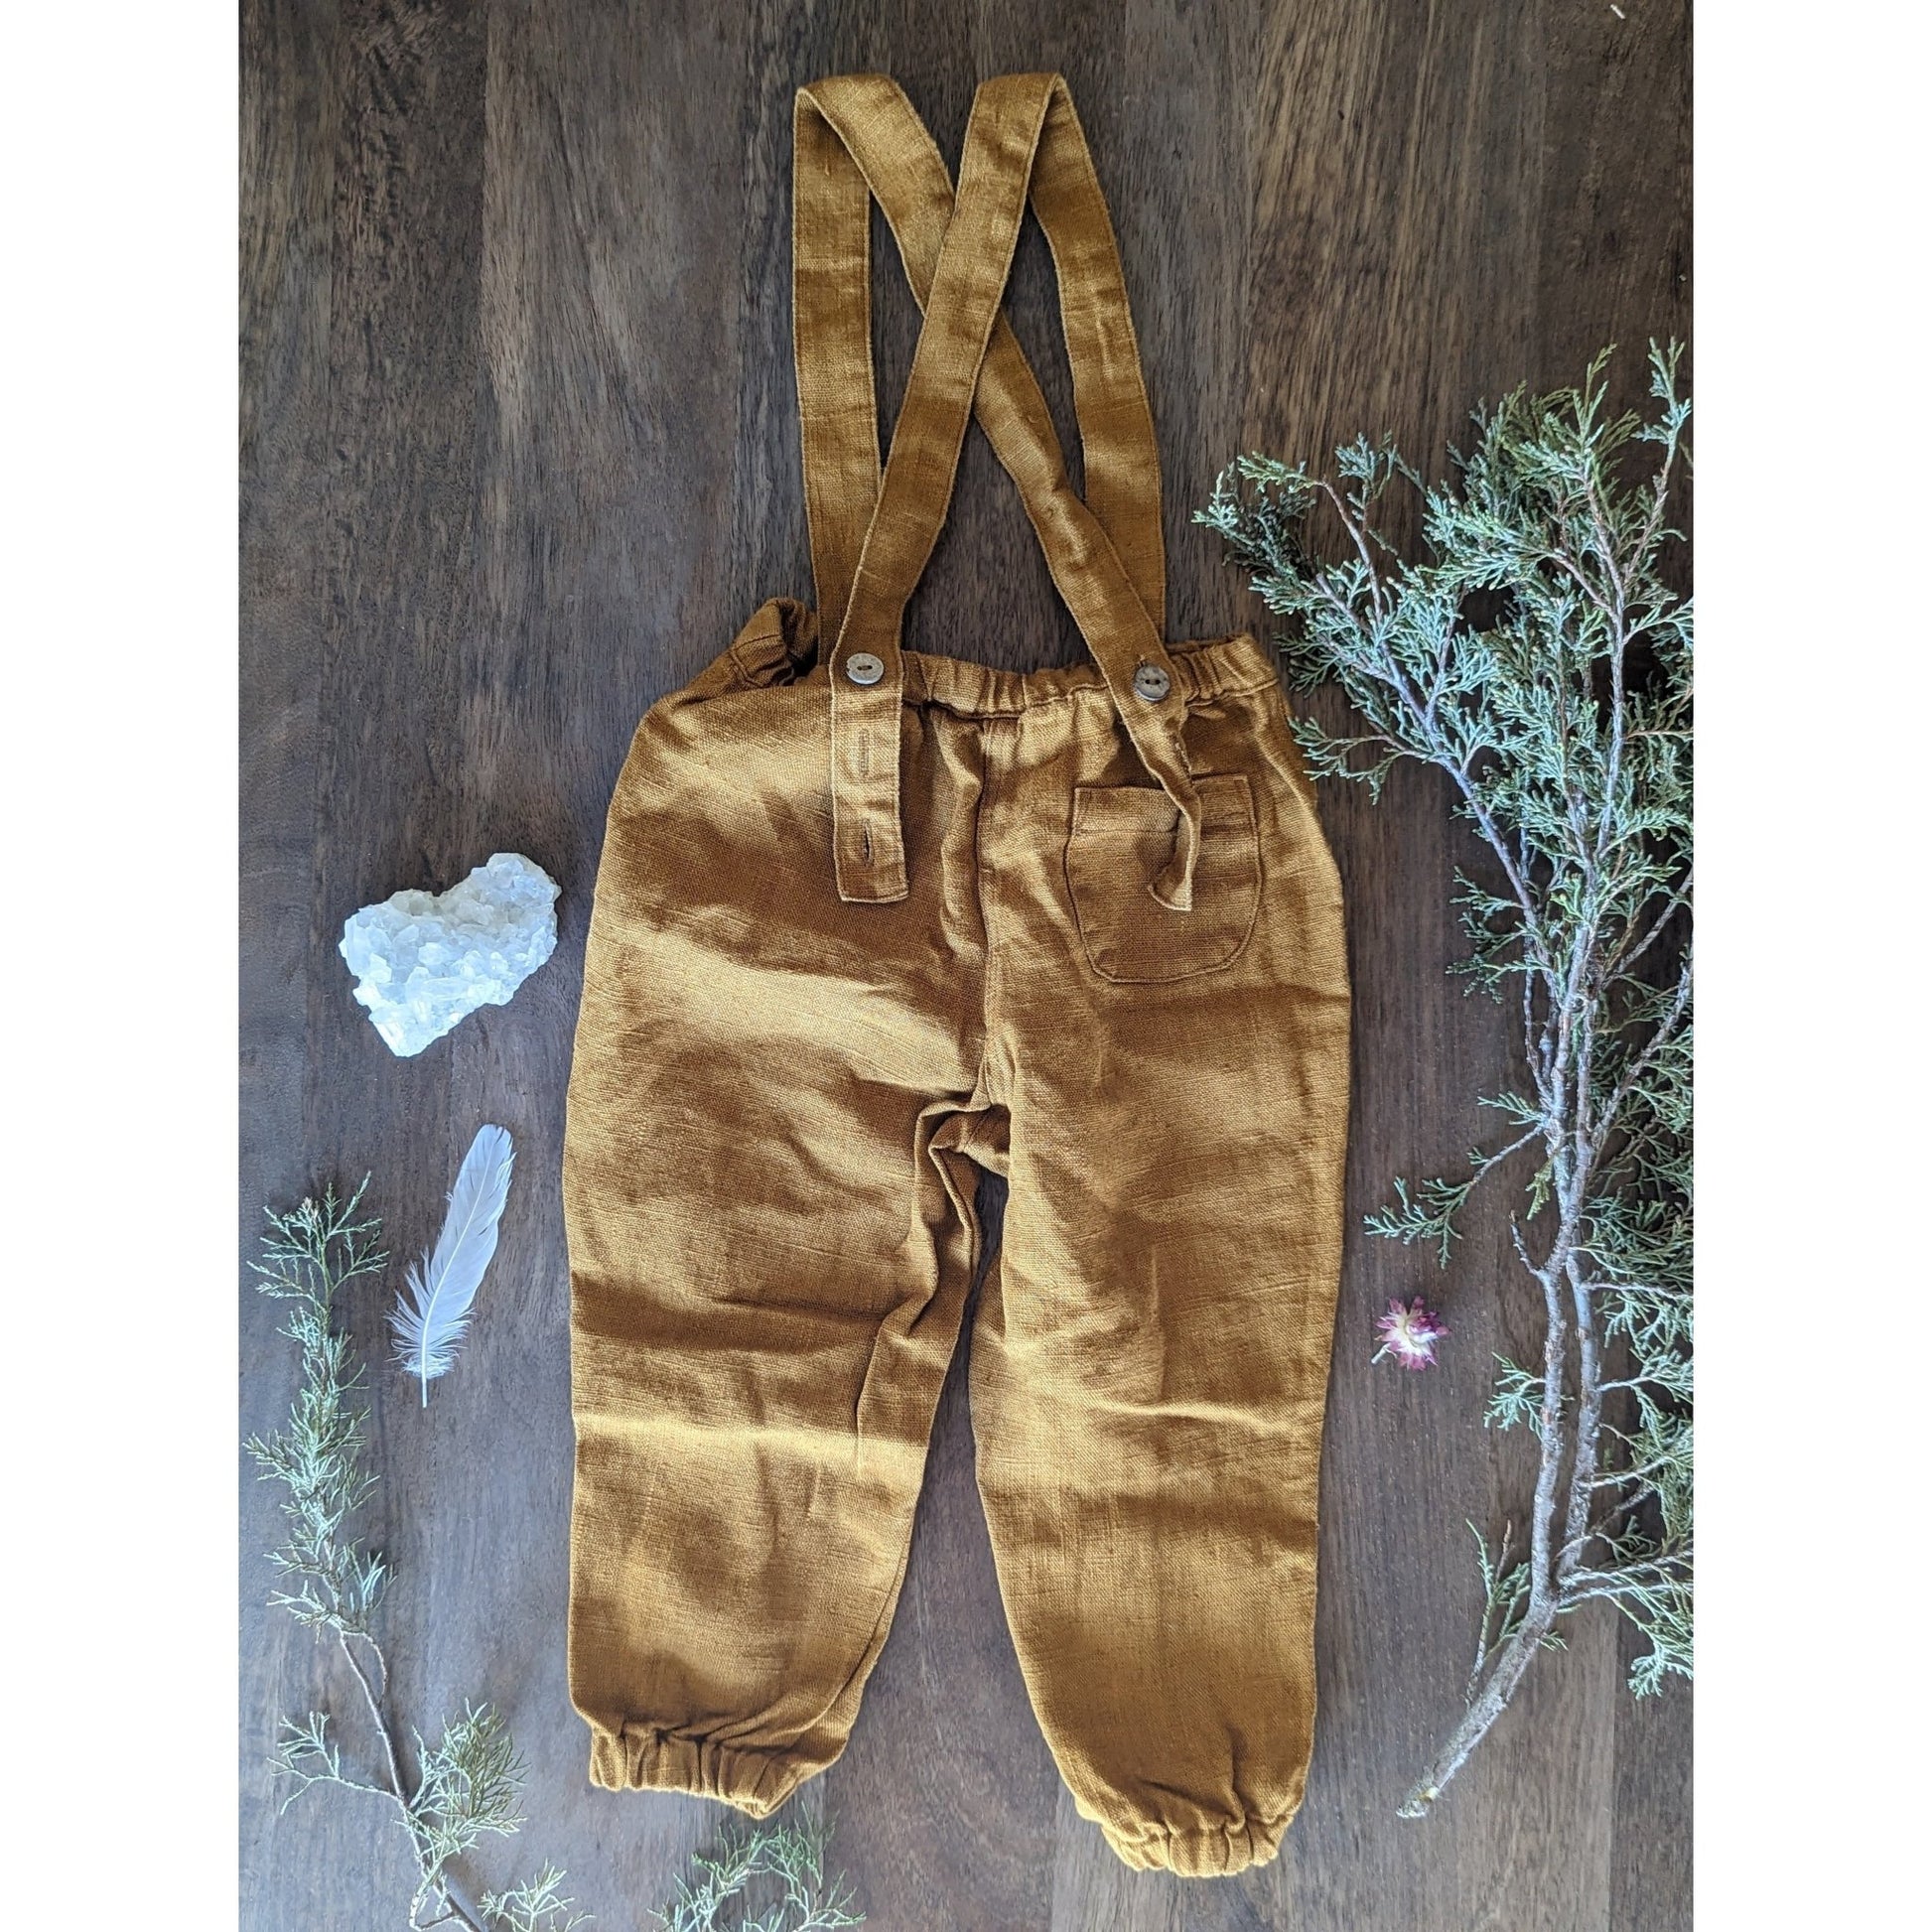 Linen Pants with Suspenders - Le Petite Alice - Mustard - Nature's Wild Child